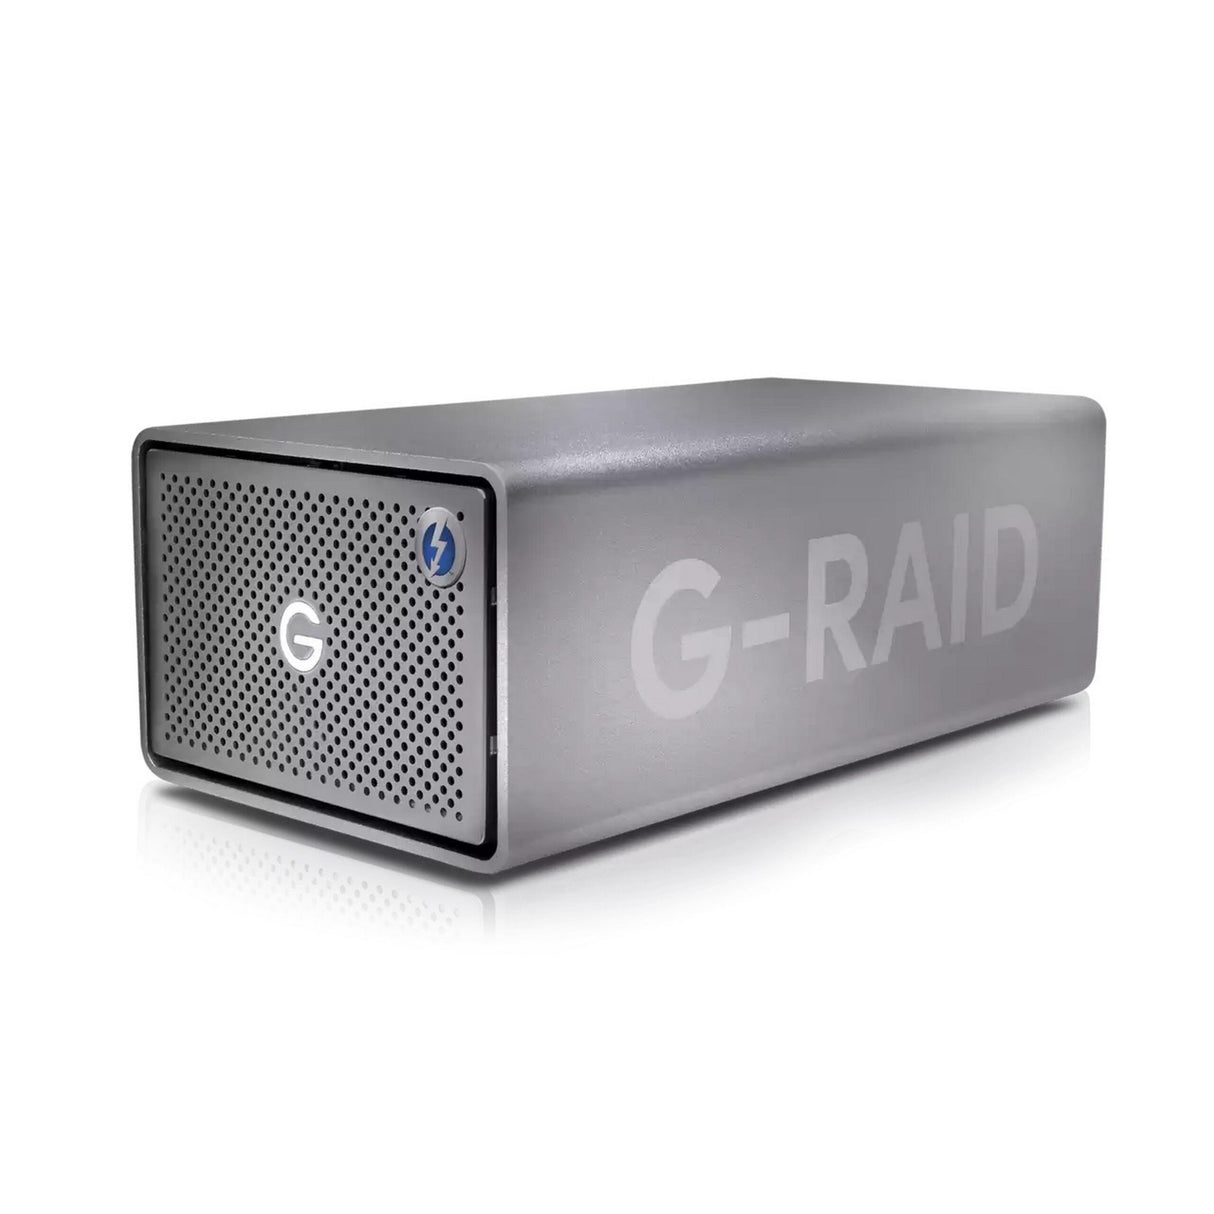 G-Technology G-RAID 2 Thunderbolt 3 External Hard Drive, 40TB